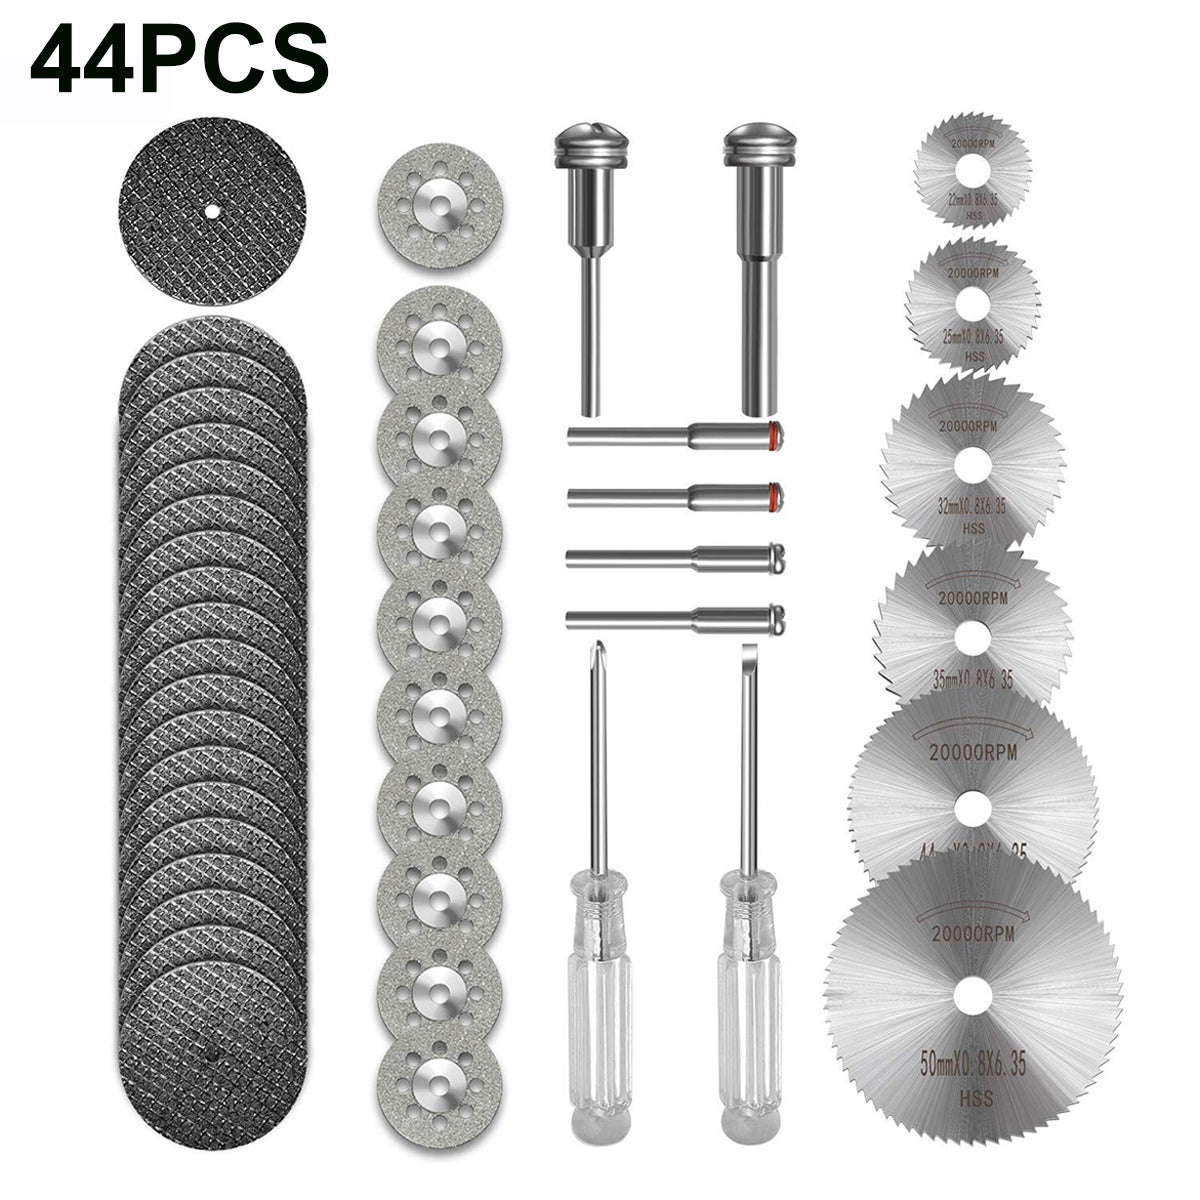 30/32/40/44Pcs Mini Circular Saw Blade Set Resin Wheels Diamond Cutting Discs Rotary Tool Accessories for Dremel Wood Plastic